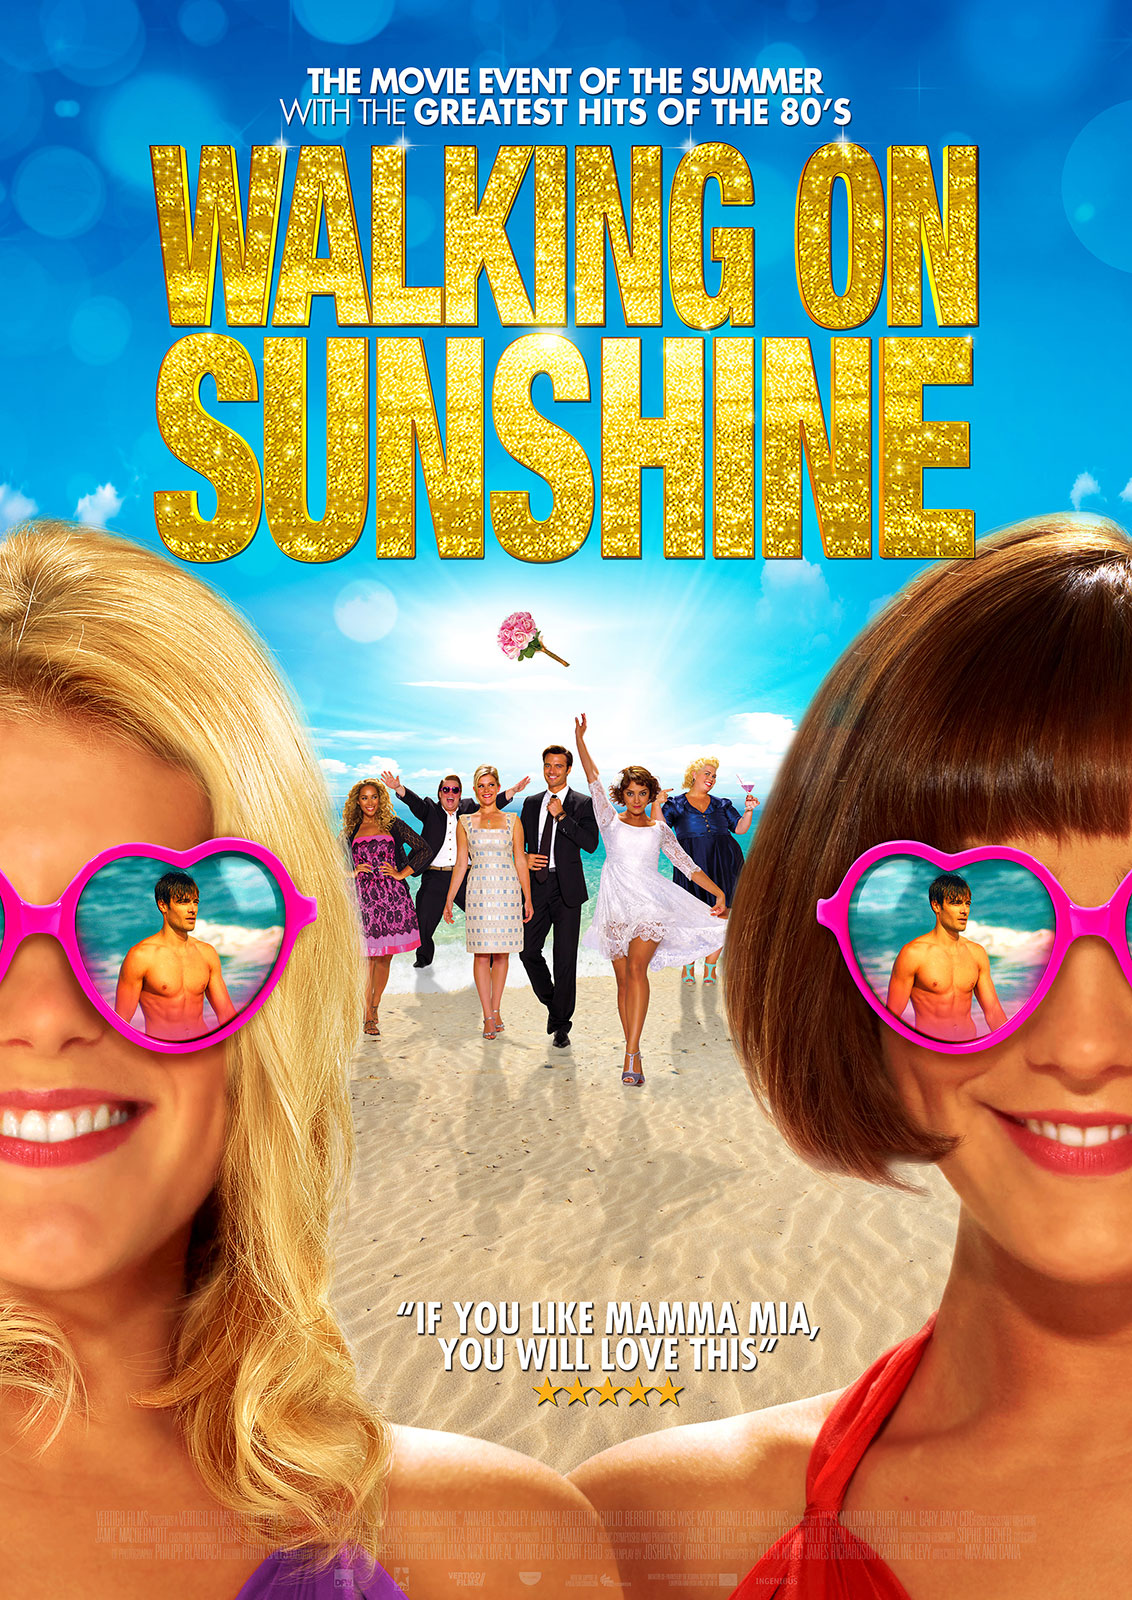 Stiahni si Filmy CZ/SK dabing Prazdniny / Walking on Sunshine (2014)(CZ)[TvRip] = CSFD 56%